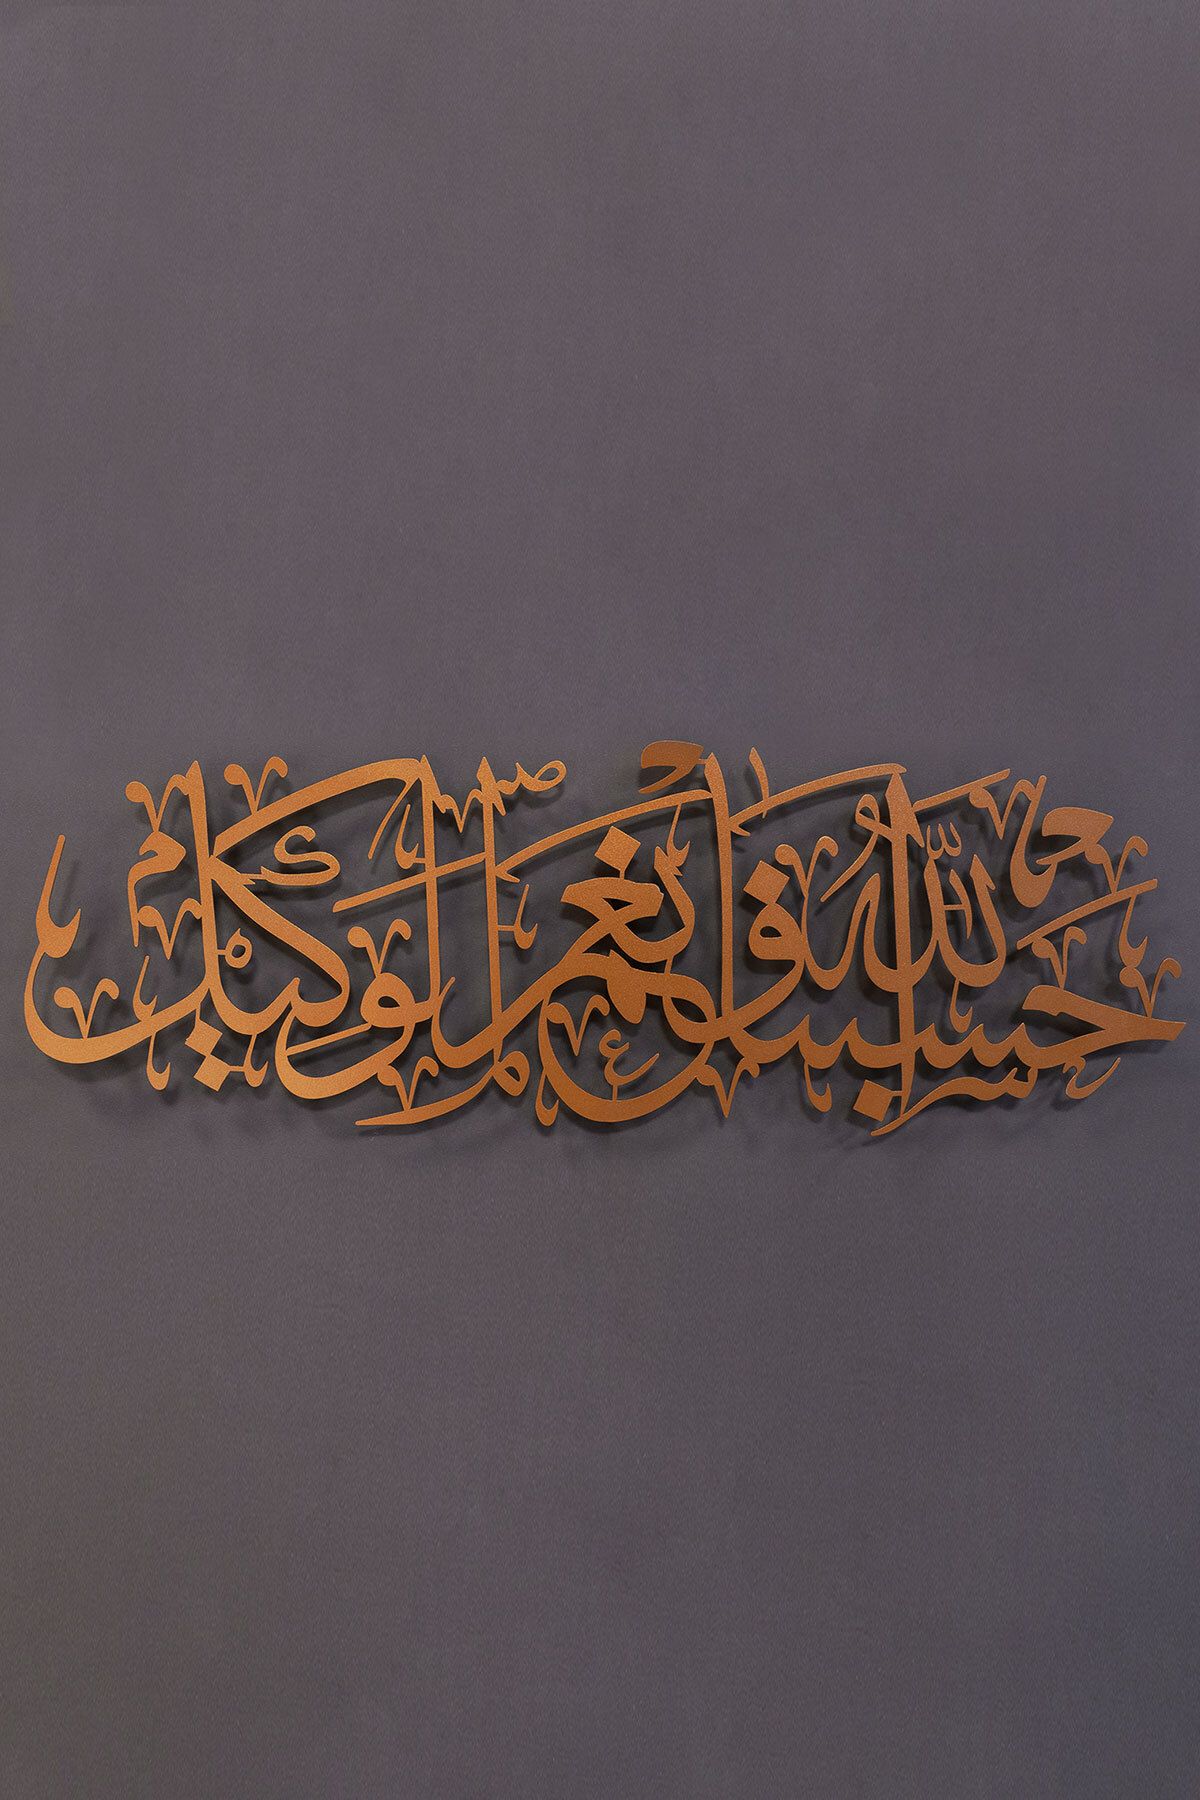 Deryashomelove - Poster; Islam, Dekoration, Home, Kunst, Bize Allah yeter O  ne güzel vekildir